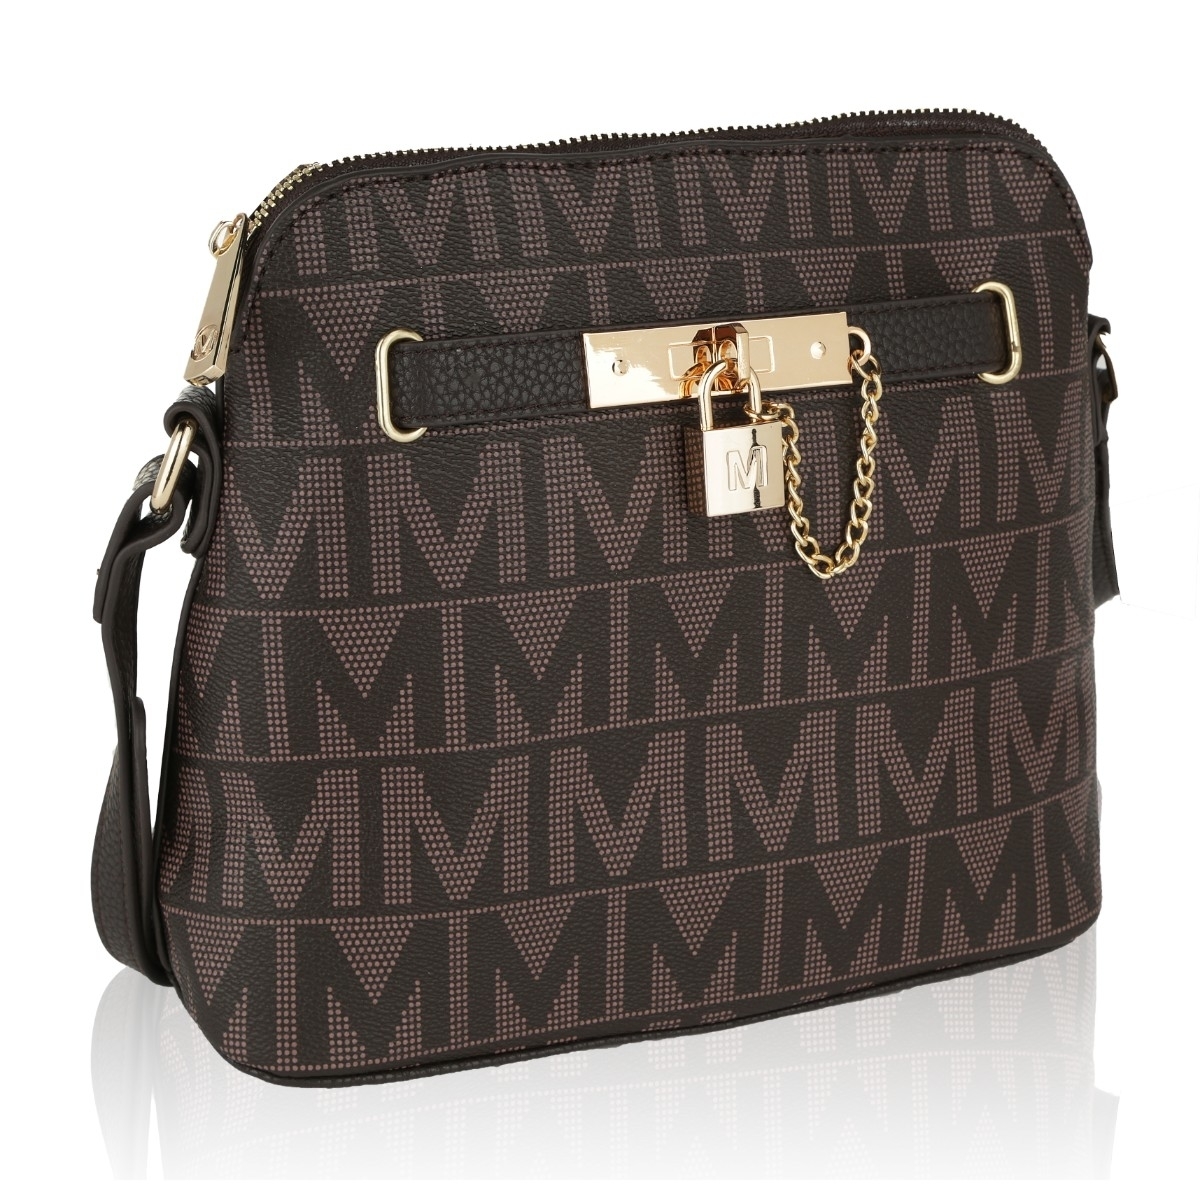 MKF Collection By Mia K. Gena M Signature Crossbody Handbag - Beige